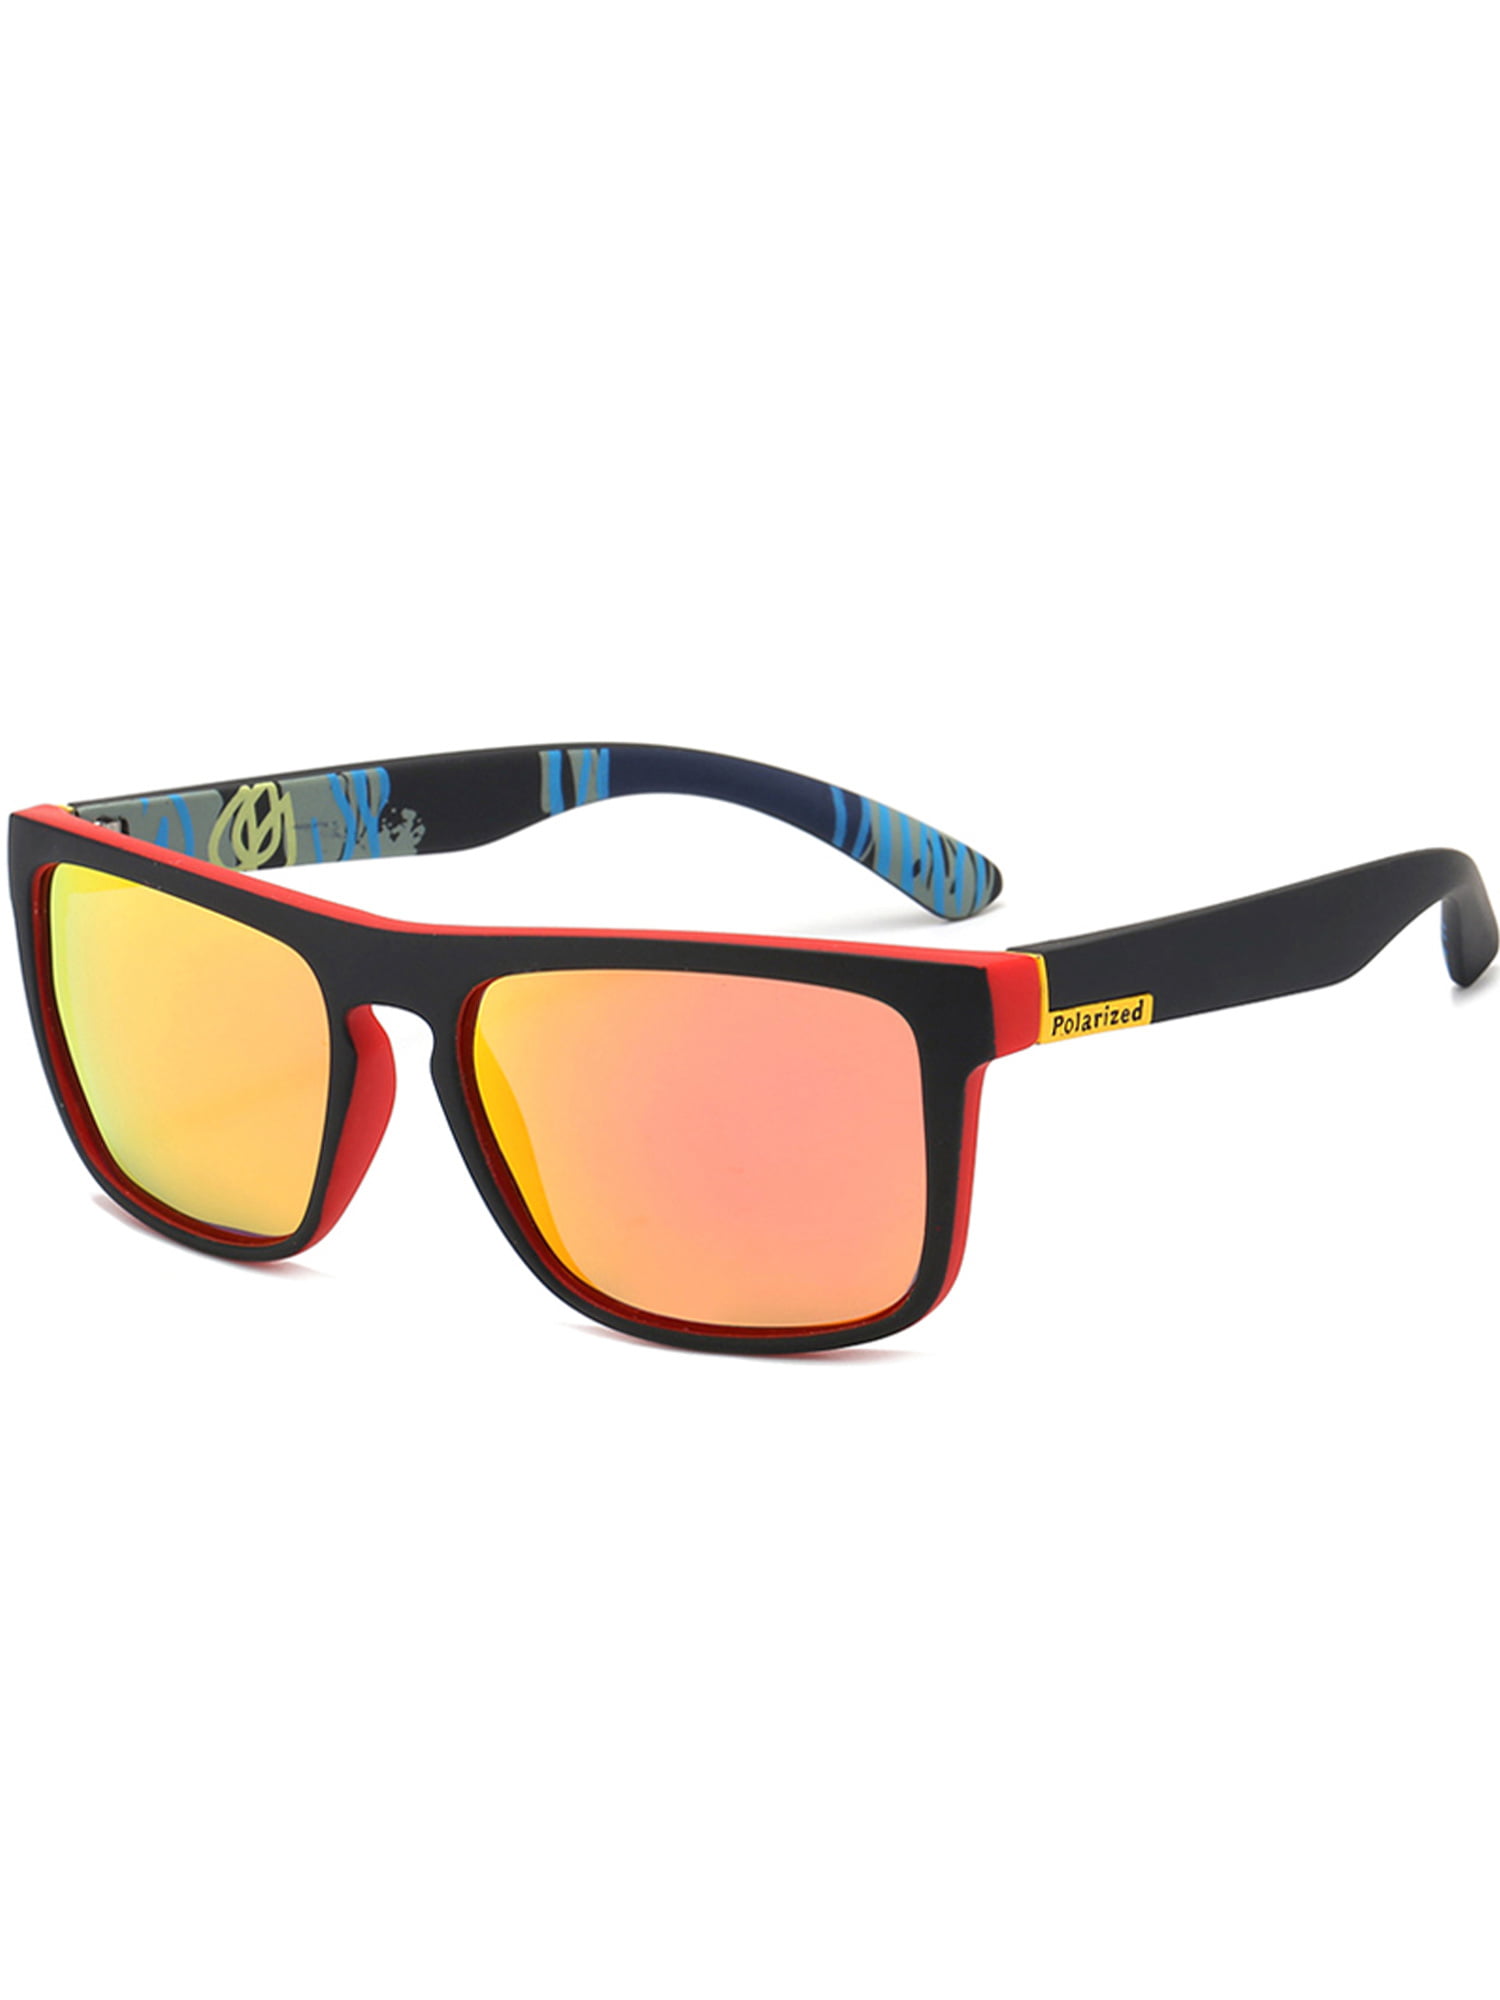 Wsunglass New mens polarizing sunglasses colorful polarizers fishing drivers riding sunglasses_1 